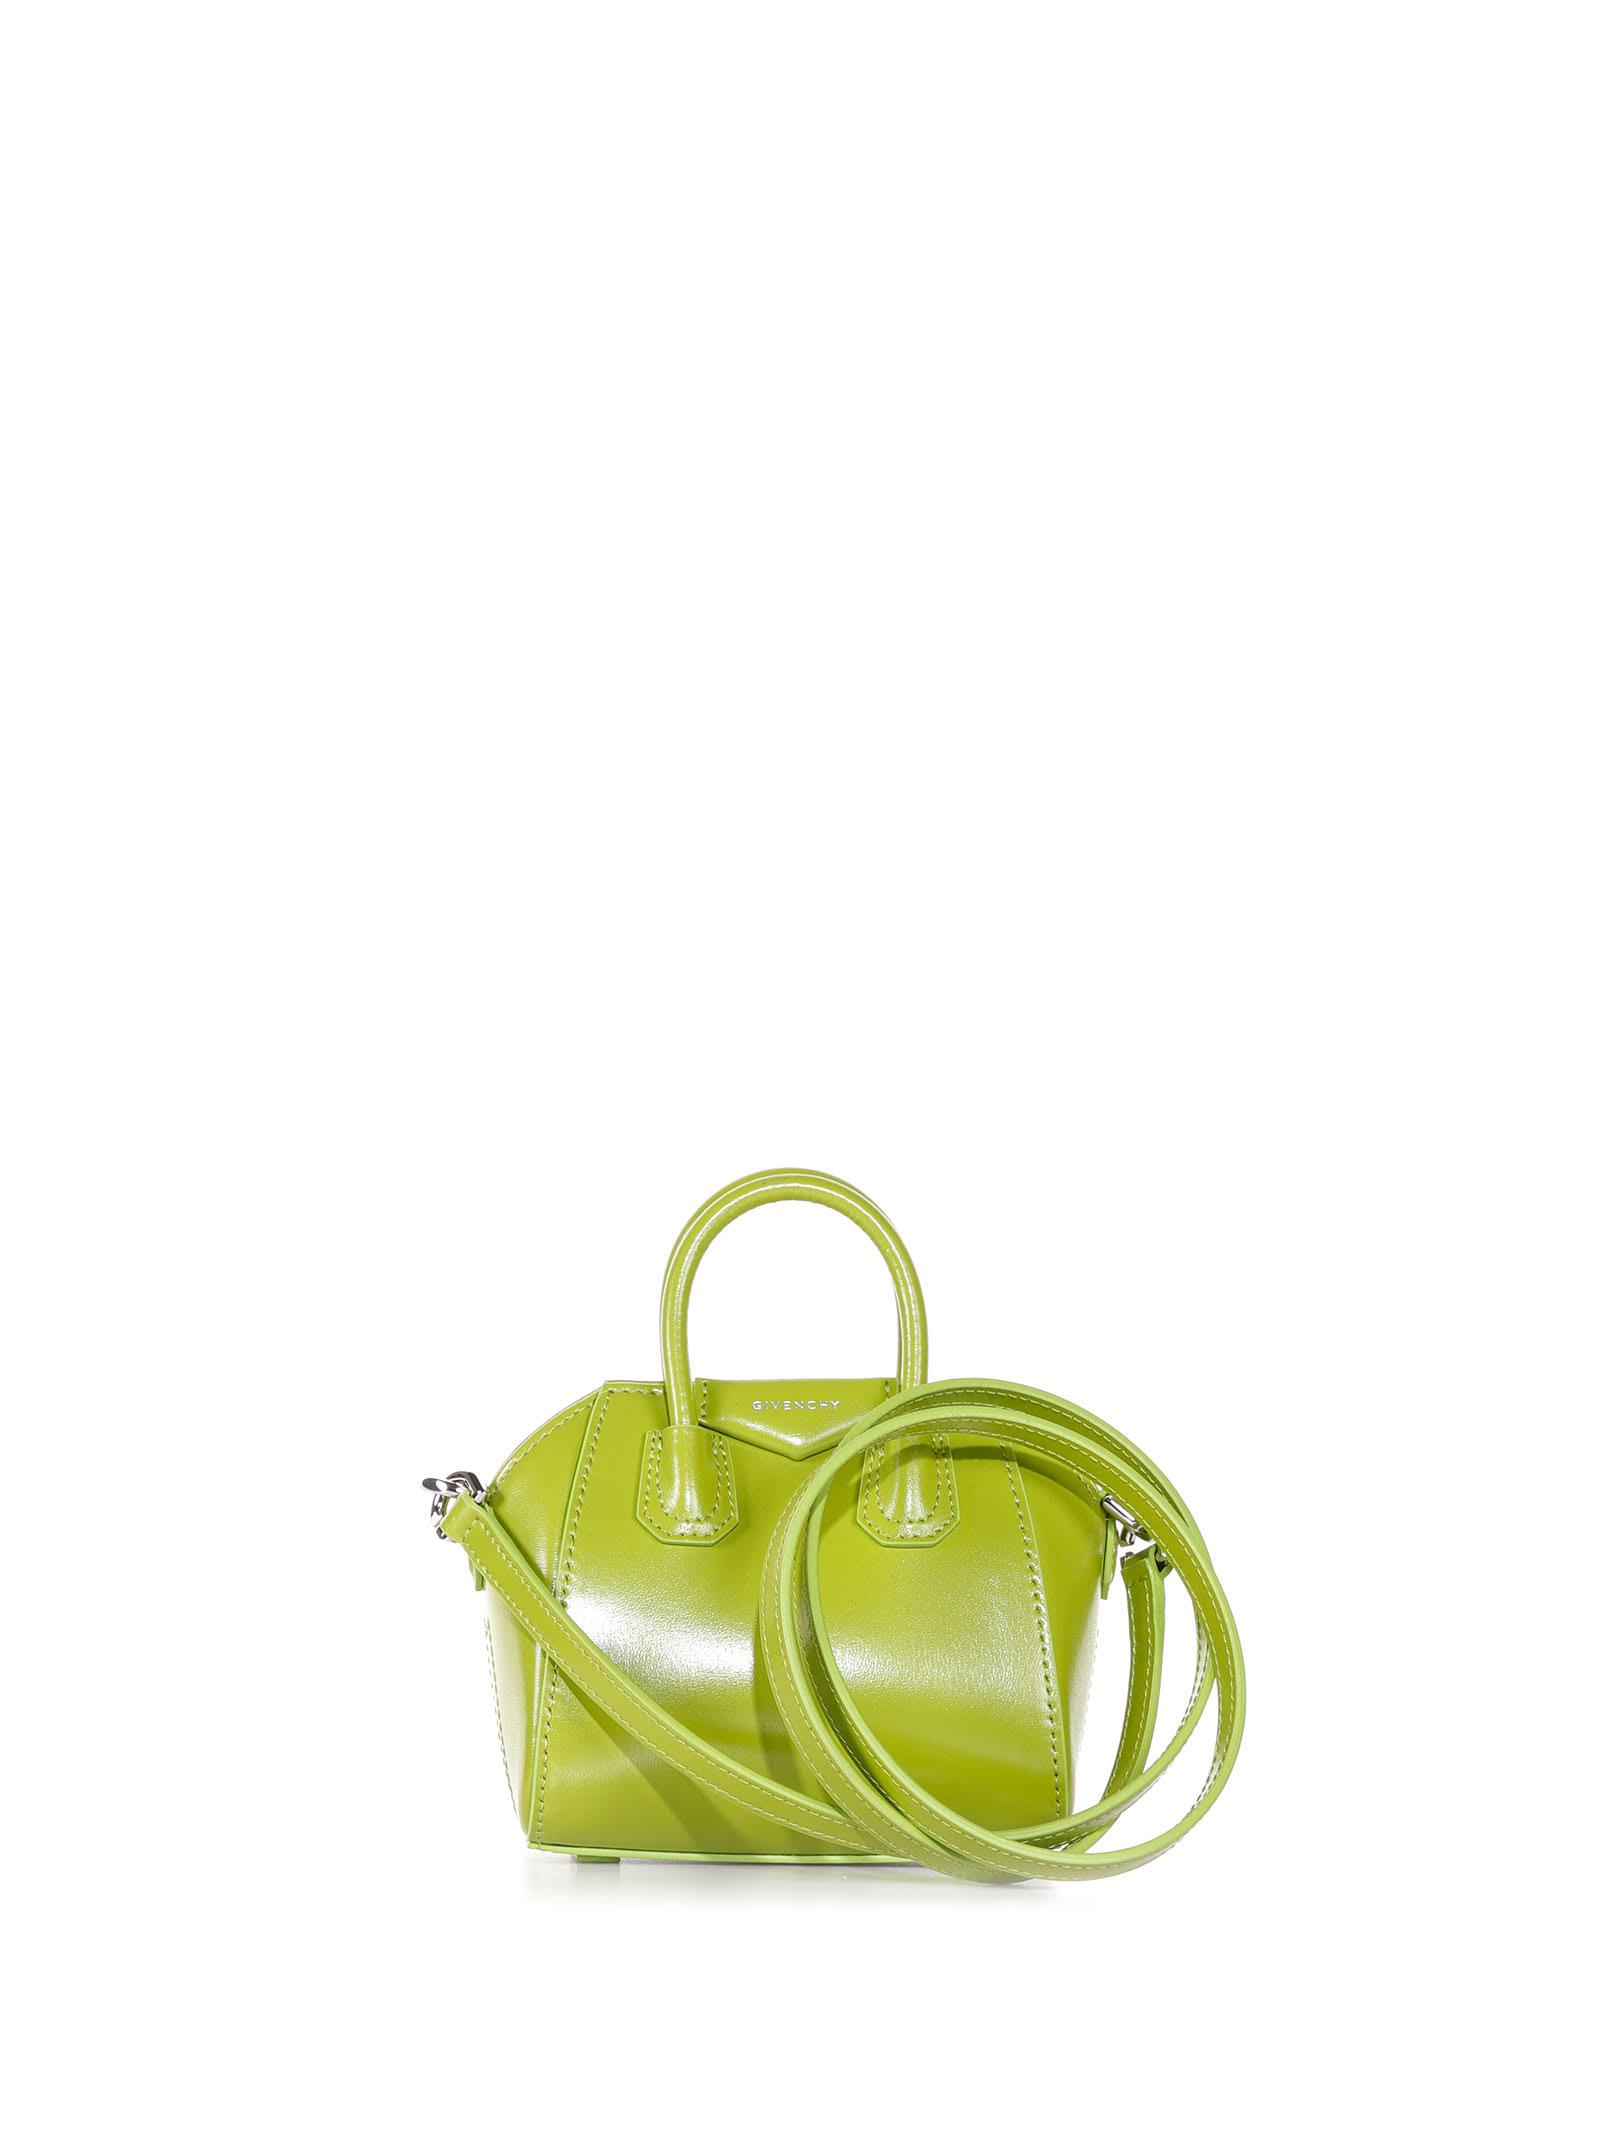 Givenchy Yellow Sugar Goatskin Leather Mini Antigona Bag